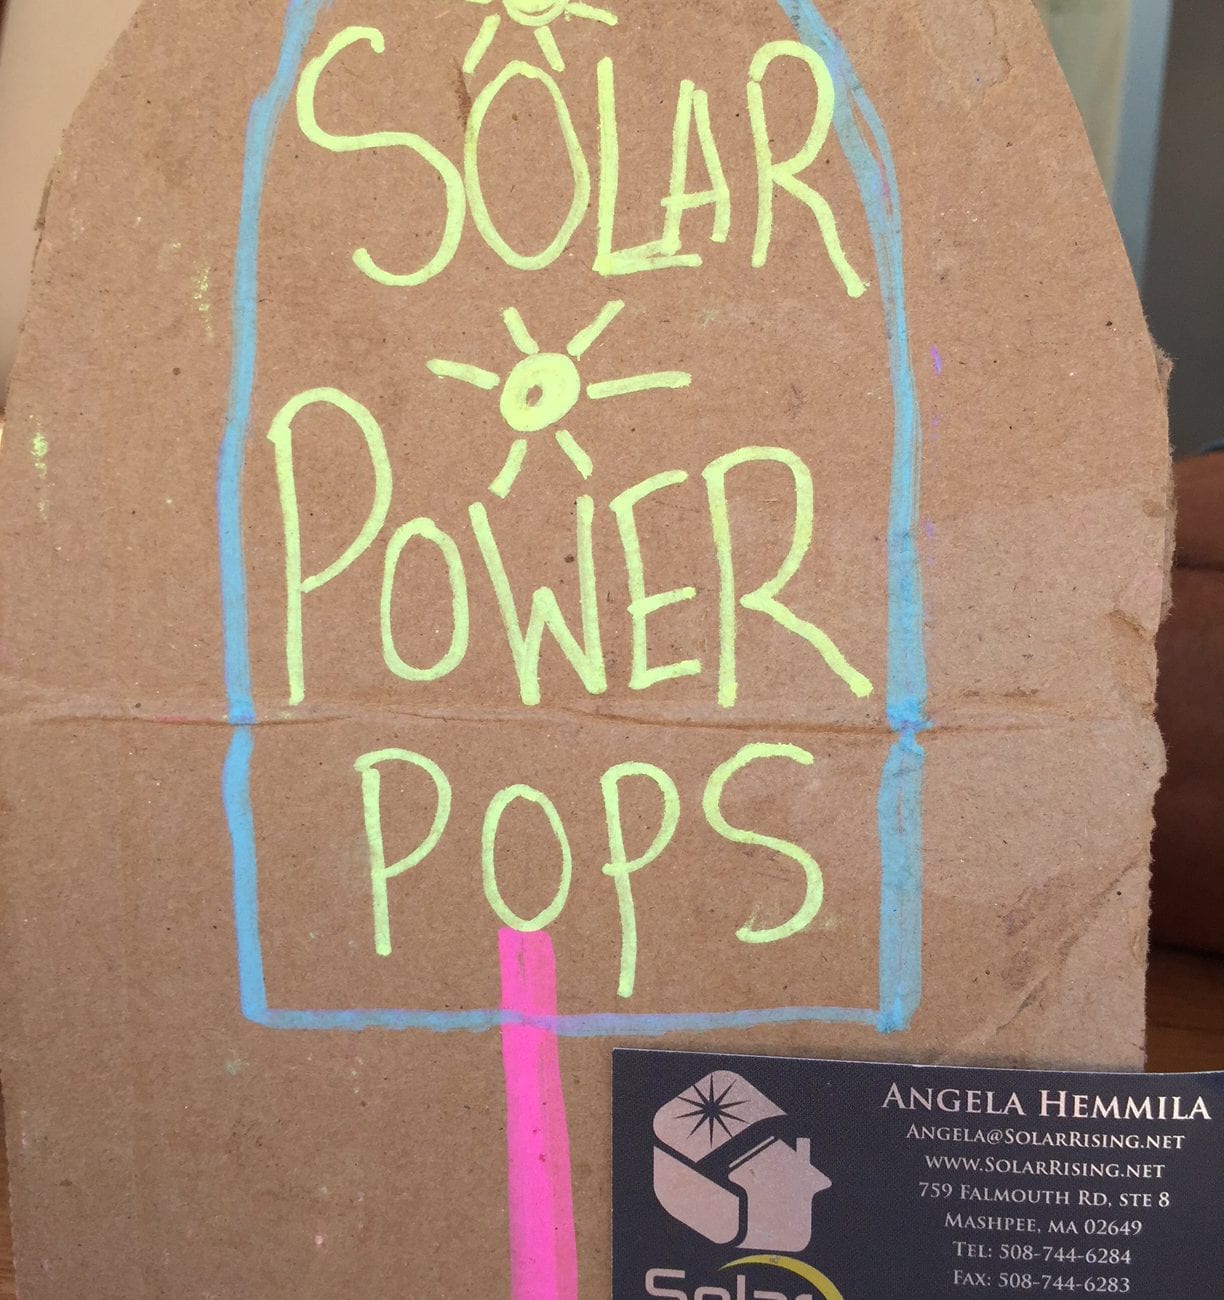 Yommi Superfood Popsicles Martha's Vineyard Food Truck Solar Power